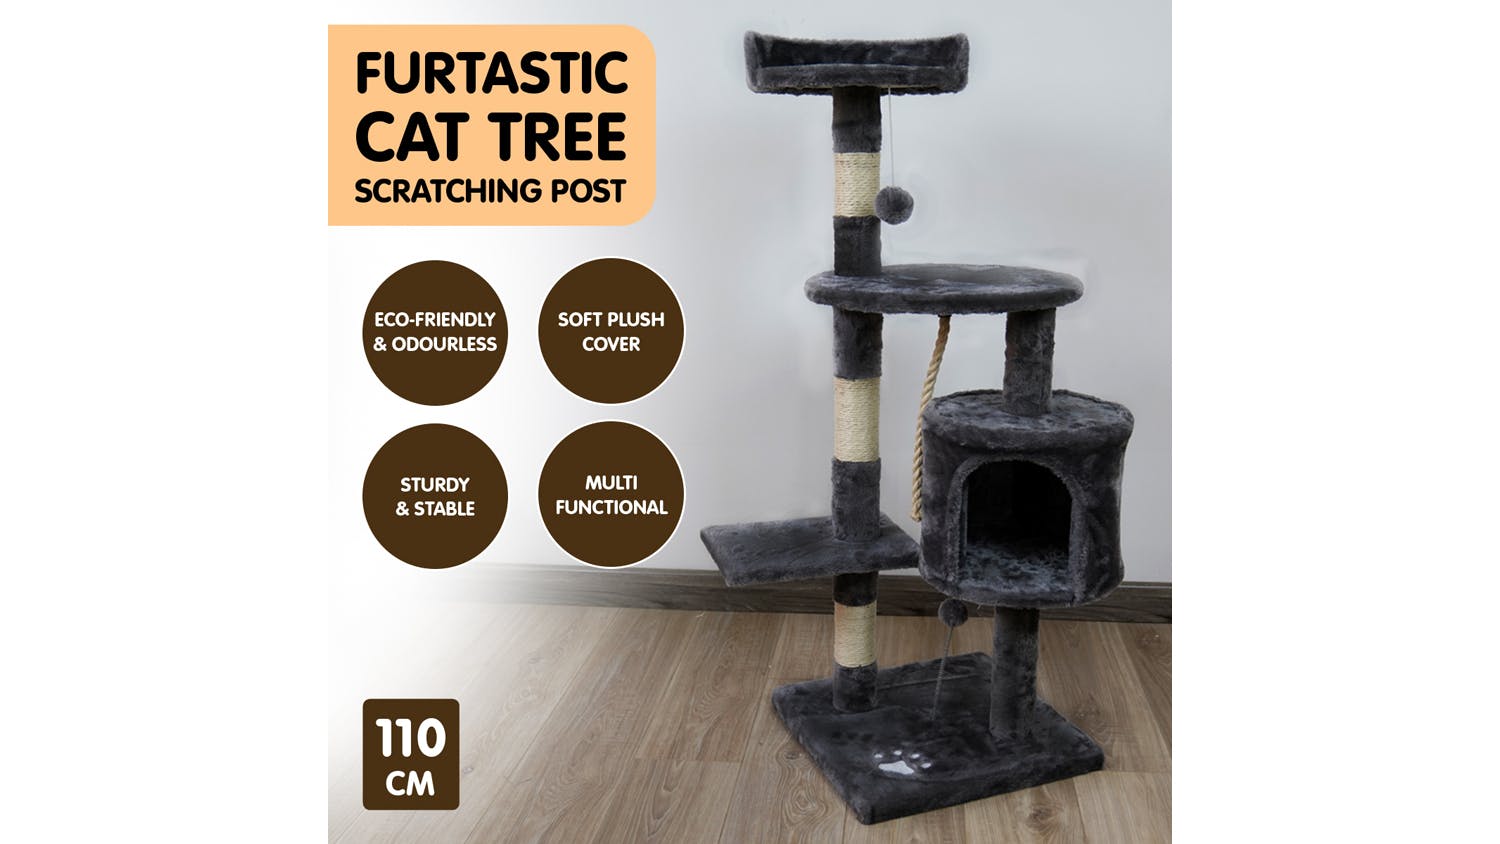 Furtastic Cat Tree 110cm - Dark Grey